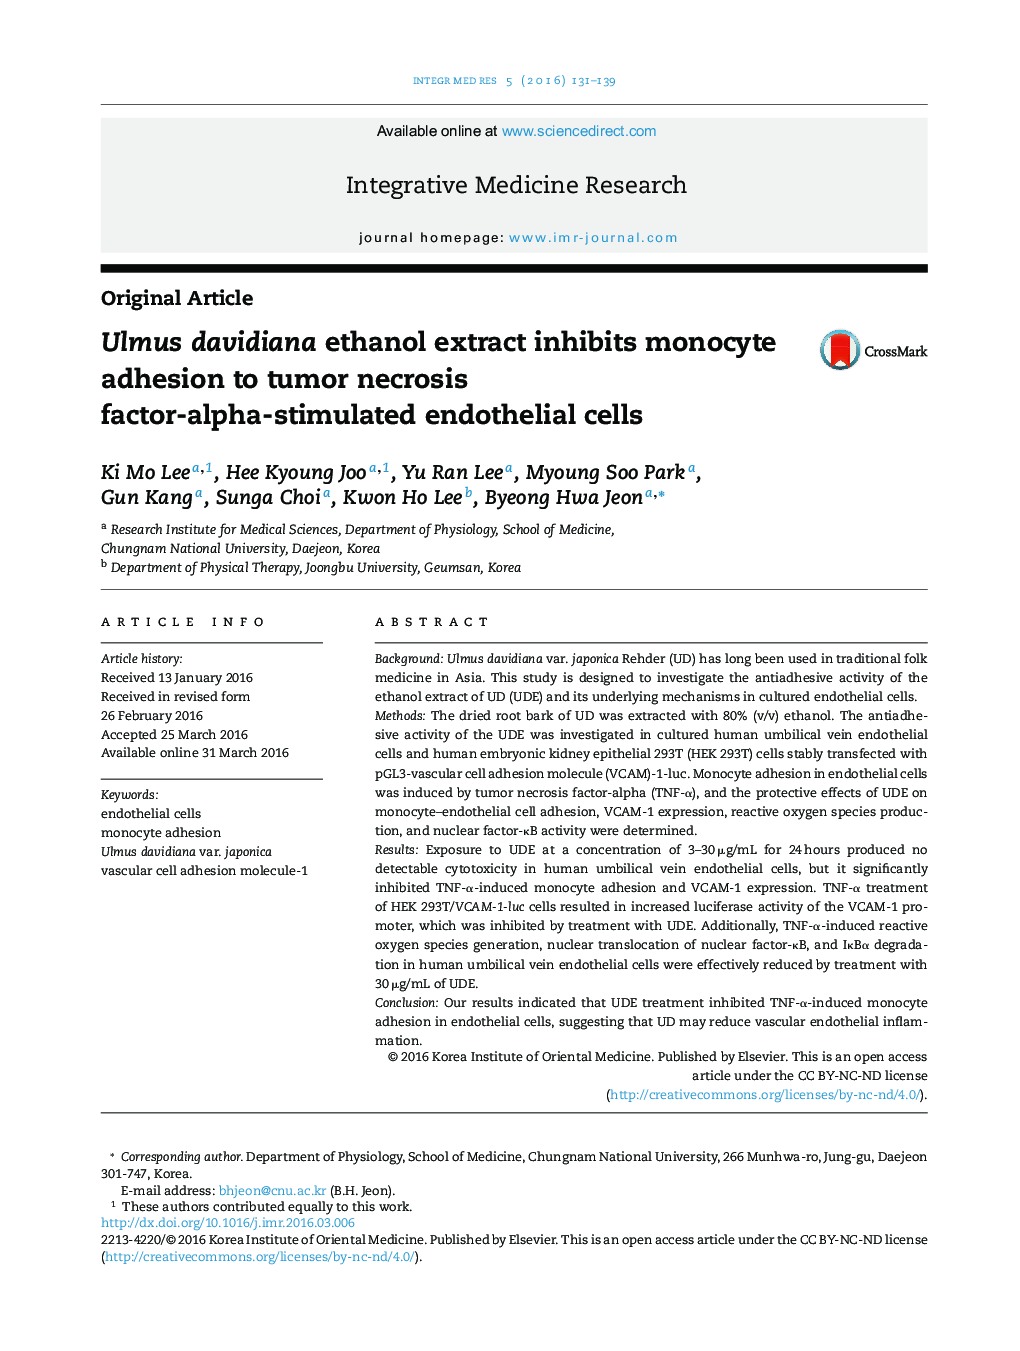 Ulmus davidiana ethanol extract inhibits monocyte adhesion to tumor necrosis factor-alpha-stimulated endothelial cells